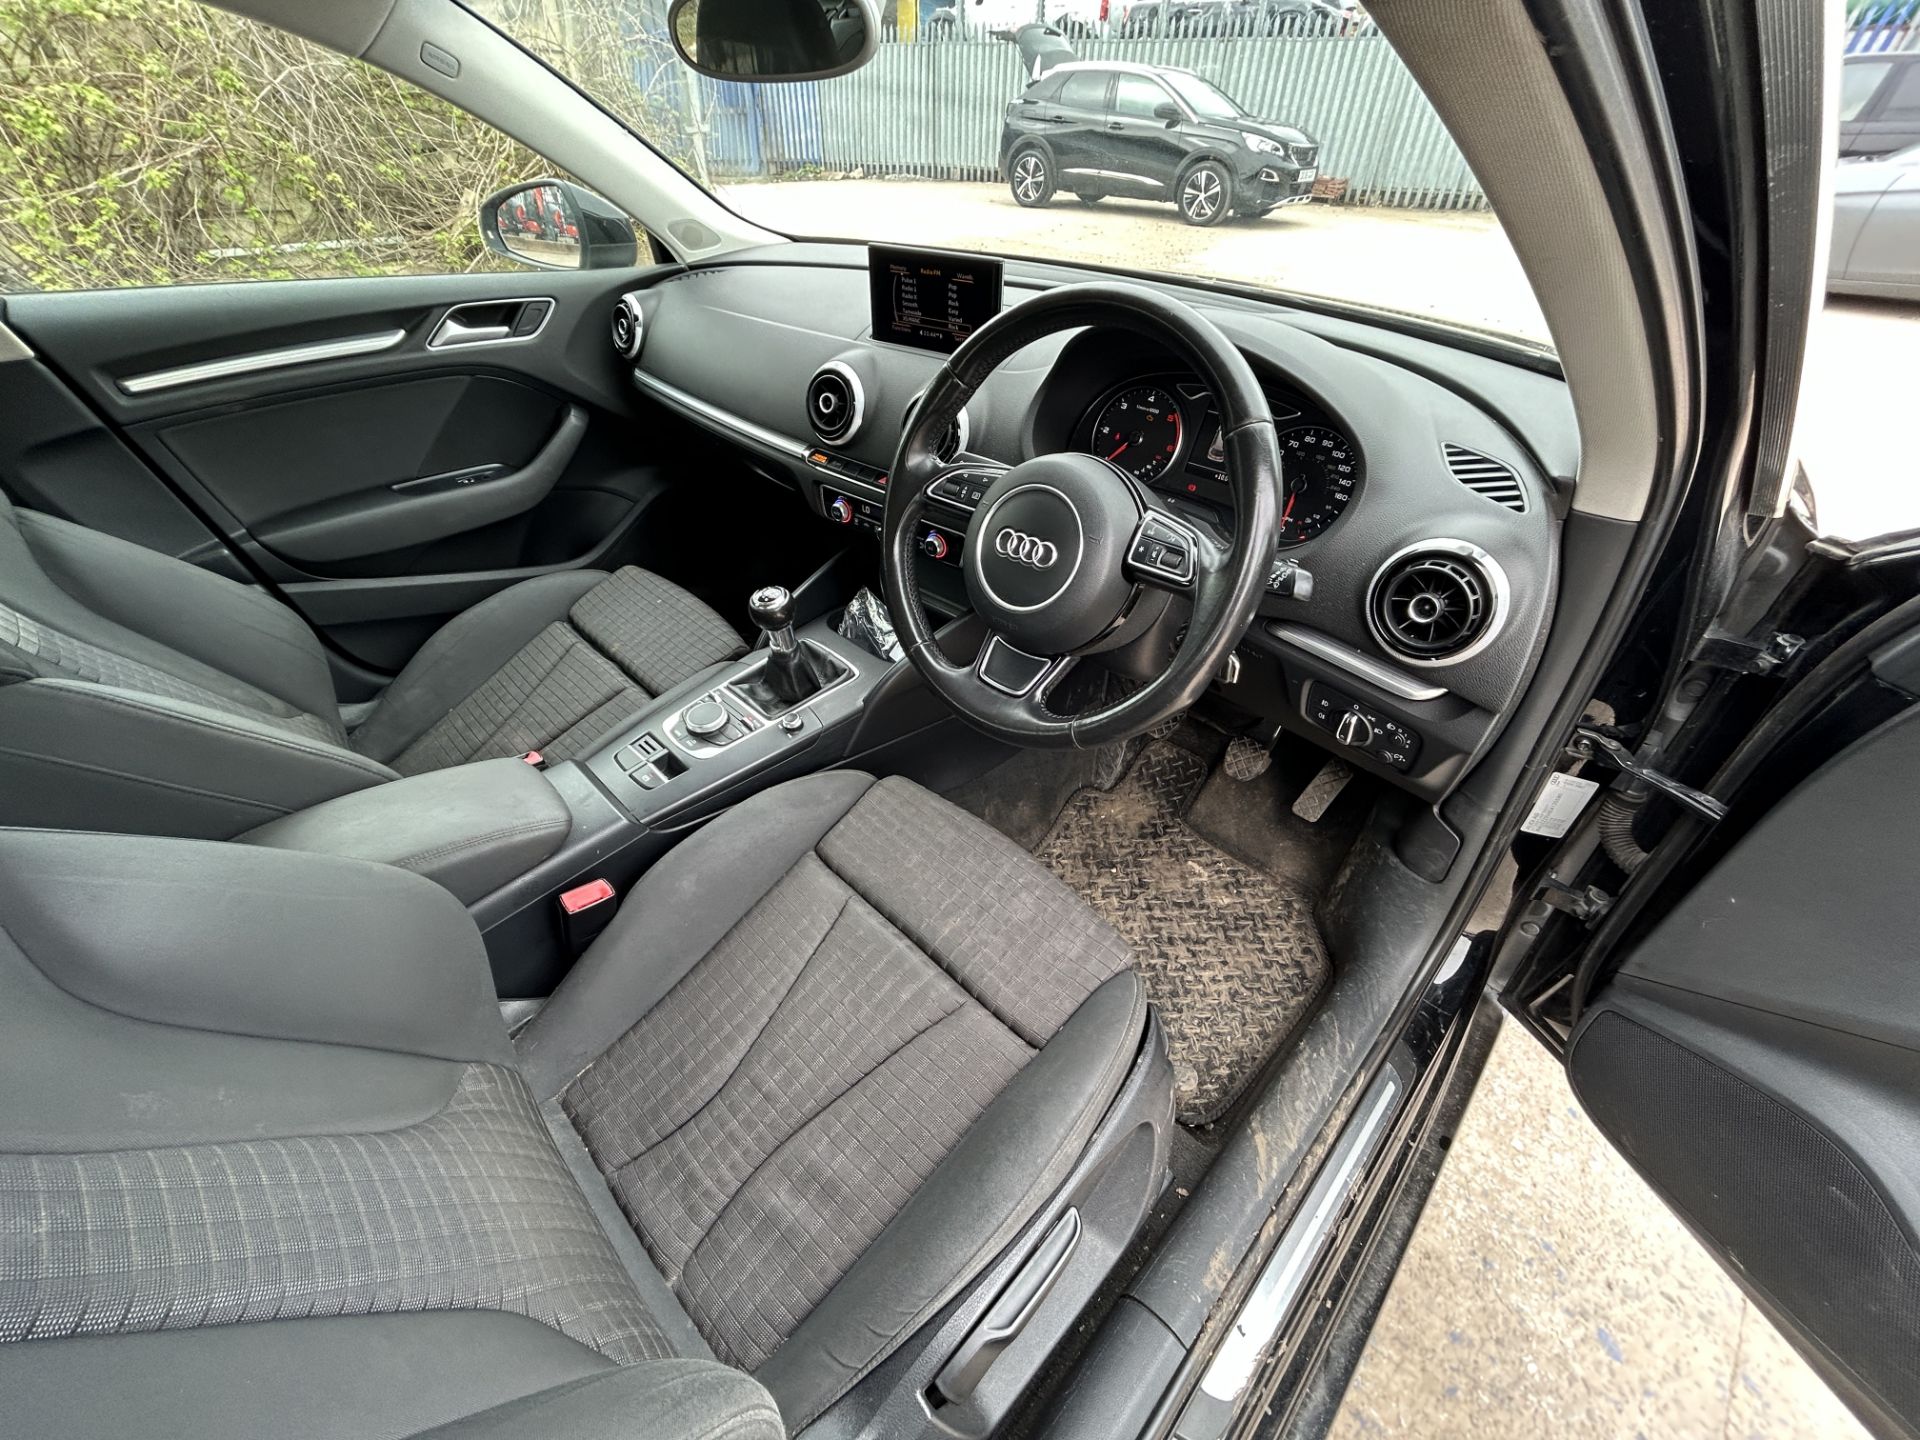 Audi A3 Sport TDI Diesel 5 Door Hatchback | YK14 CLZ | 178,860 Miles - Image 11 of 14